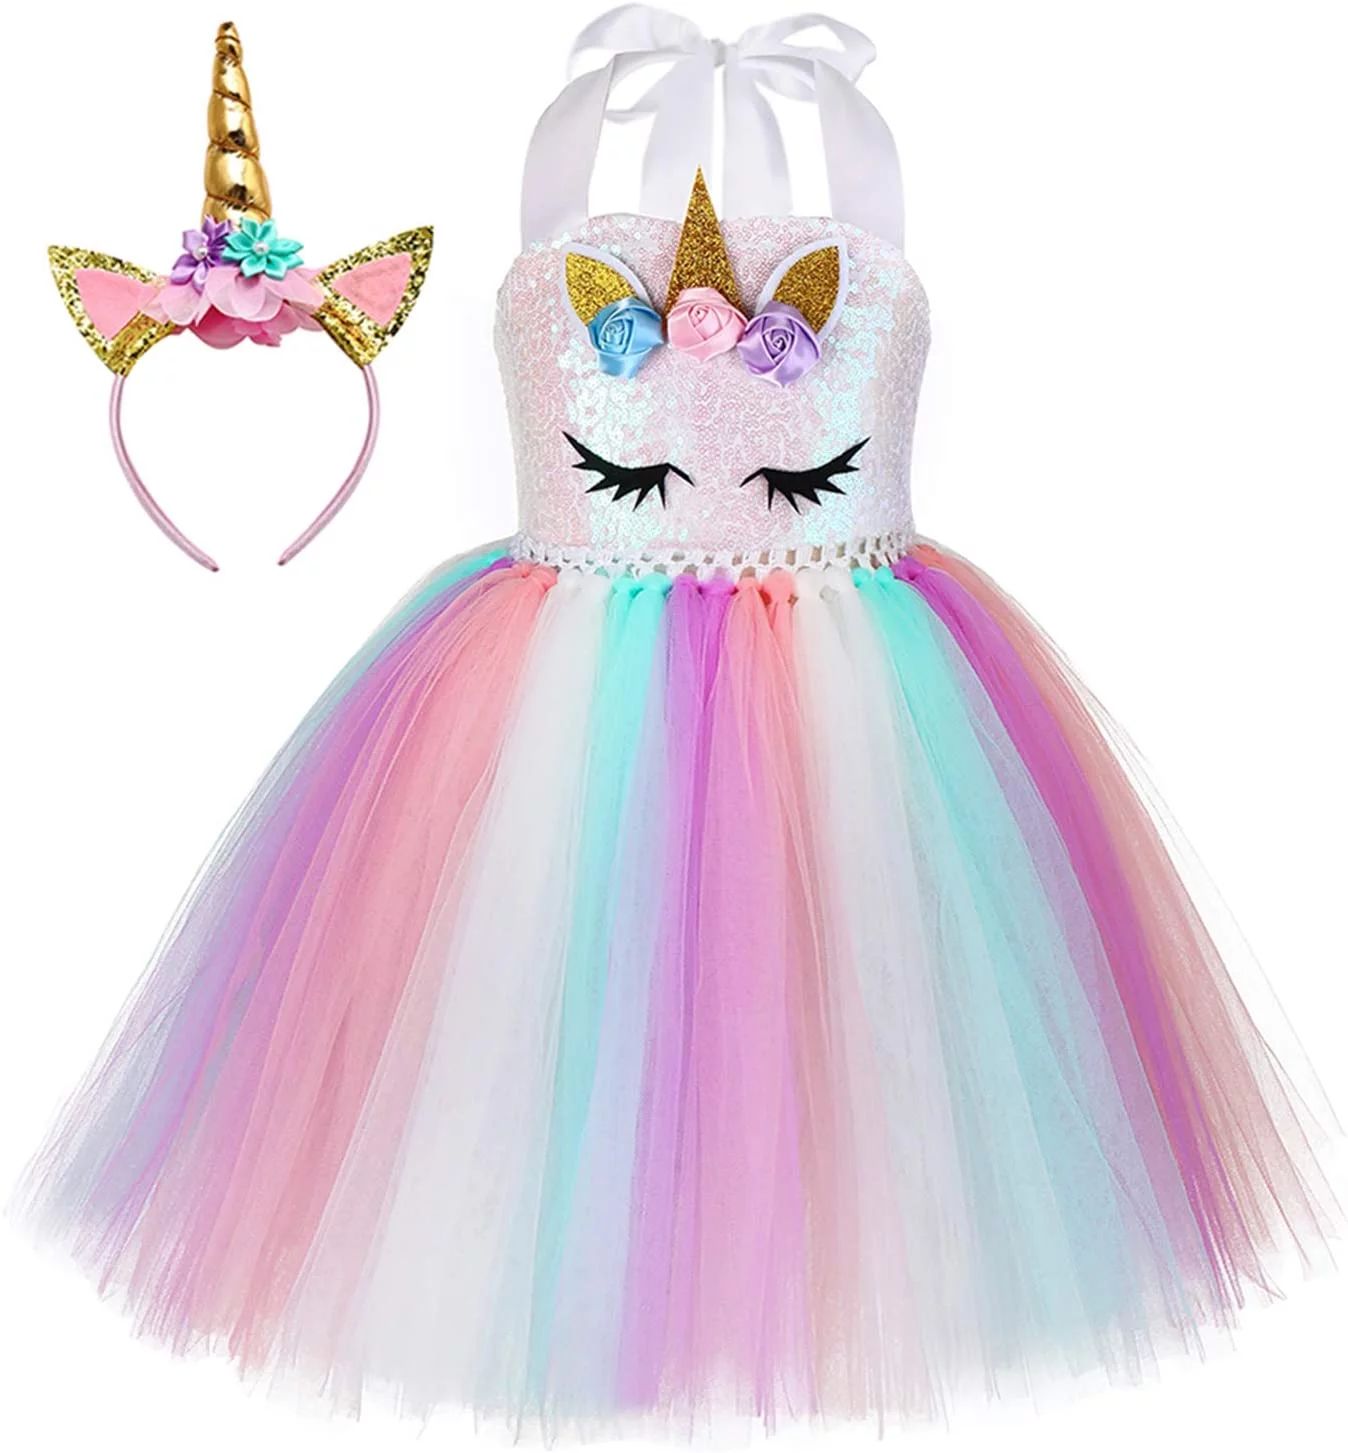 Unicorn Dress for Girls, LONGRV 1-9 Year Old Girls Unicorn Party Costume with Headband, Birthday ... | Walmart (US)